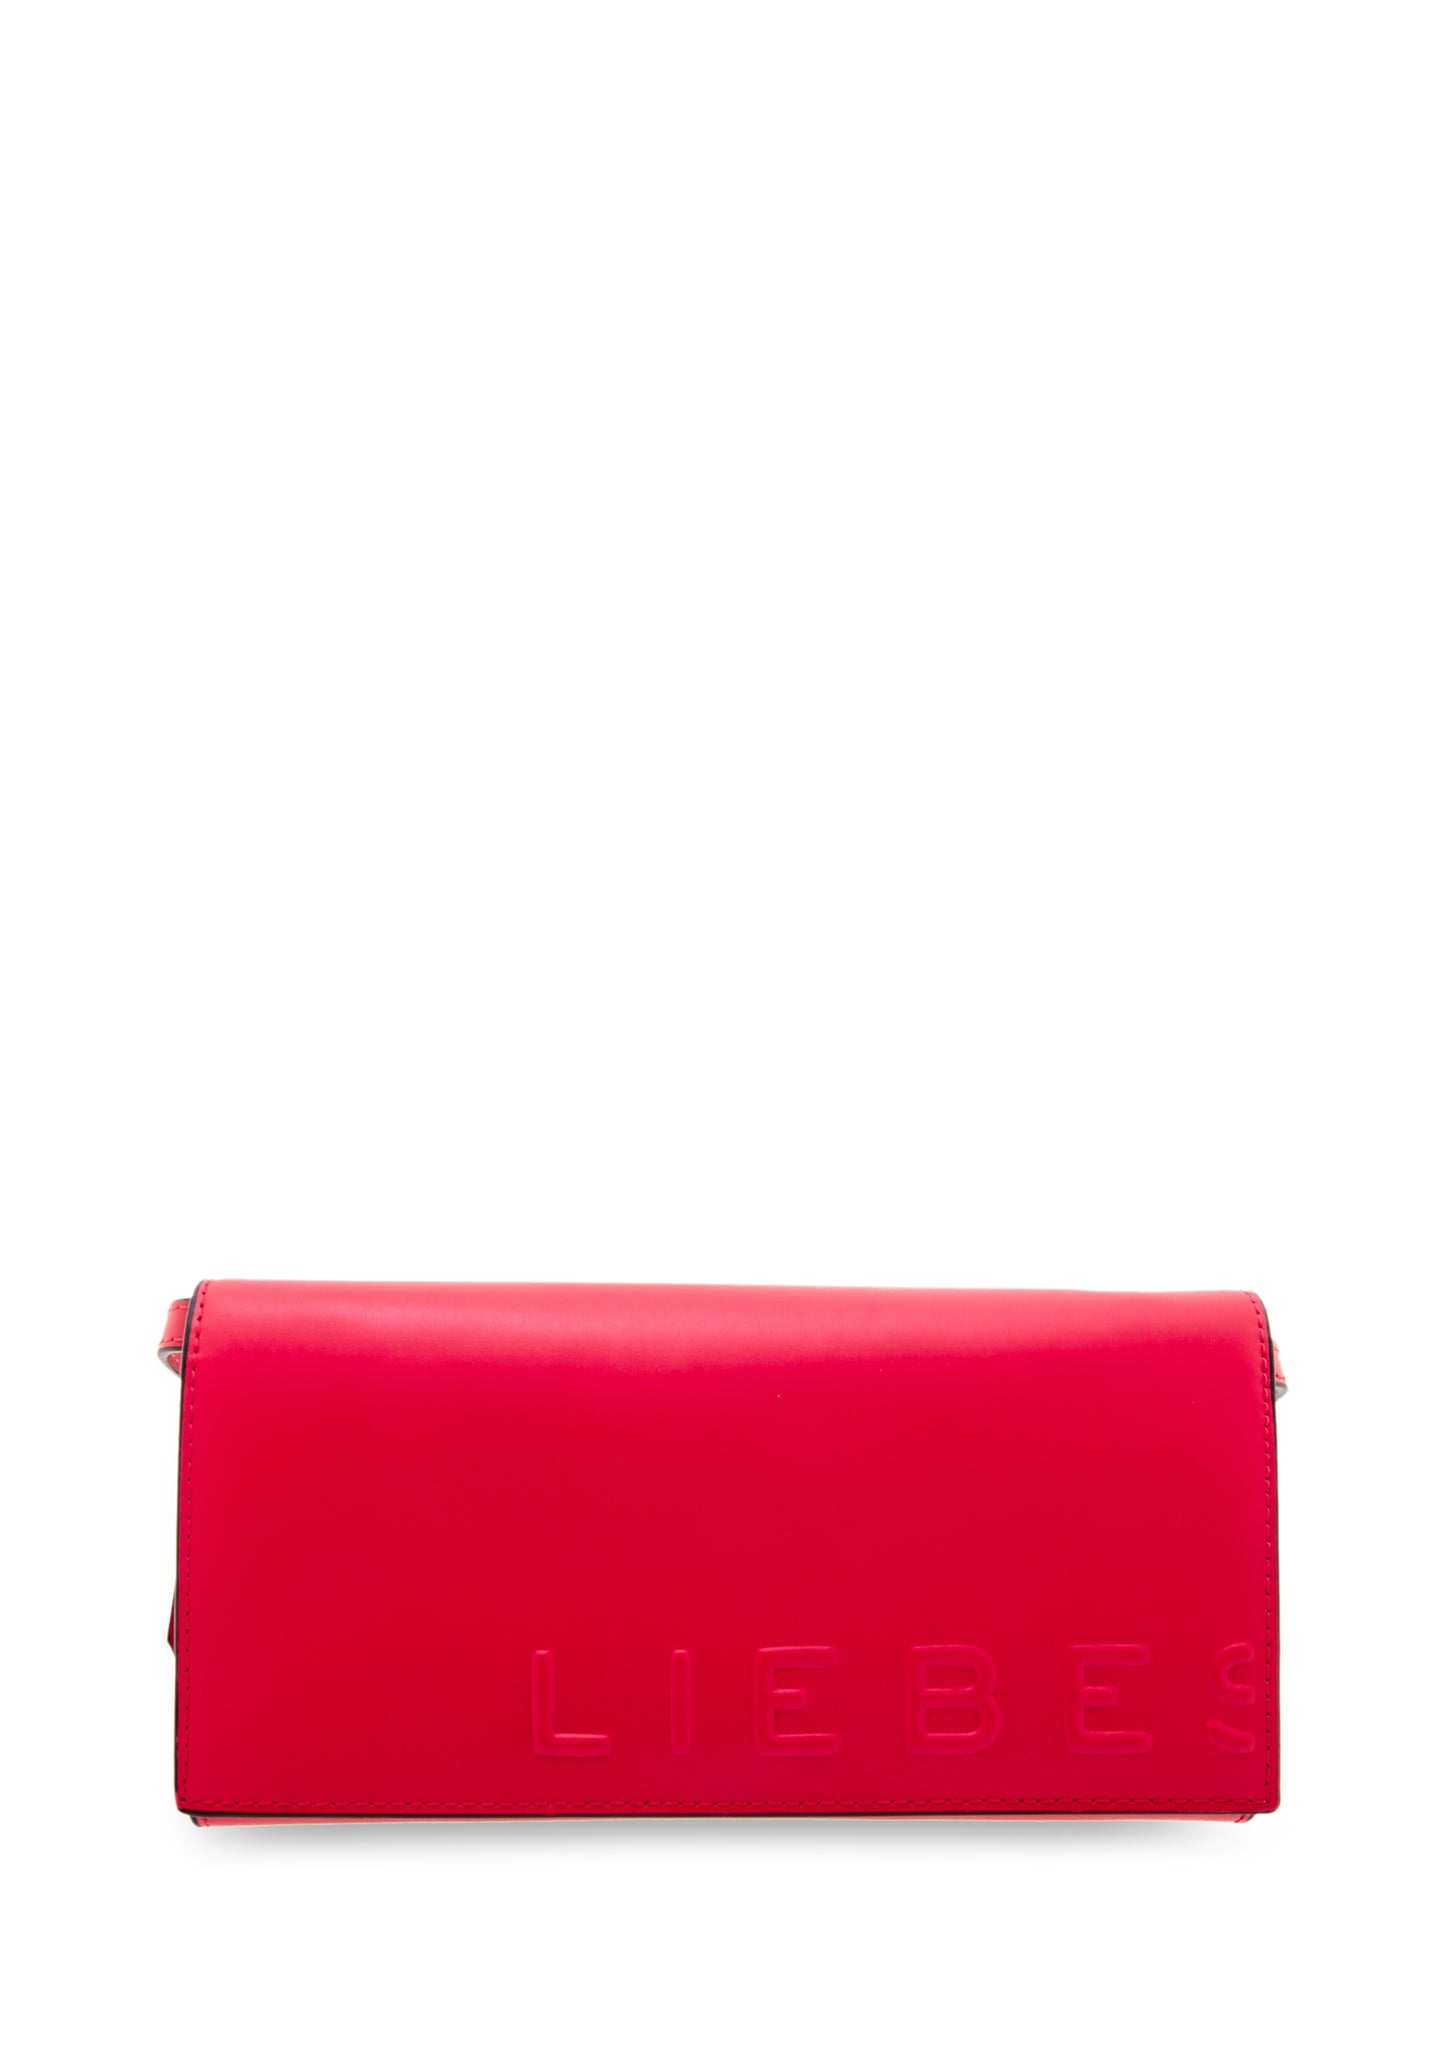 Paper Bag Crossbody XS lemonade pink | Bildmaterial bereitgestellt von SHOES.PLEASE.